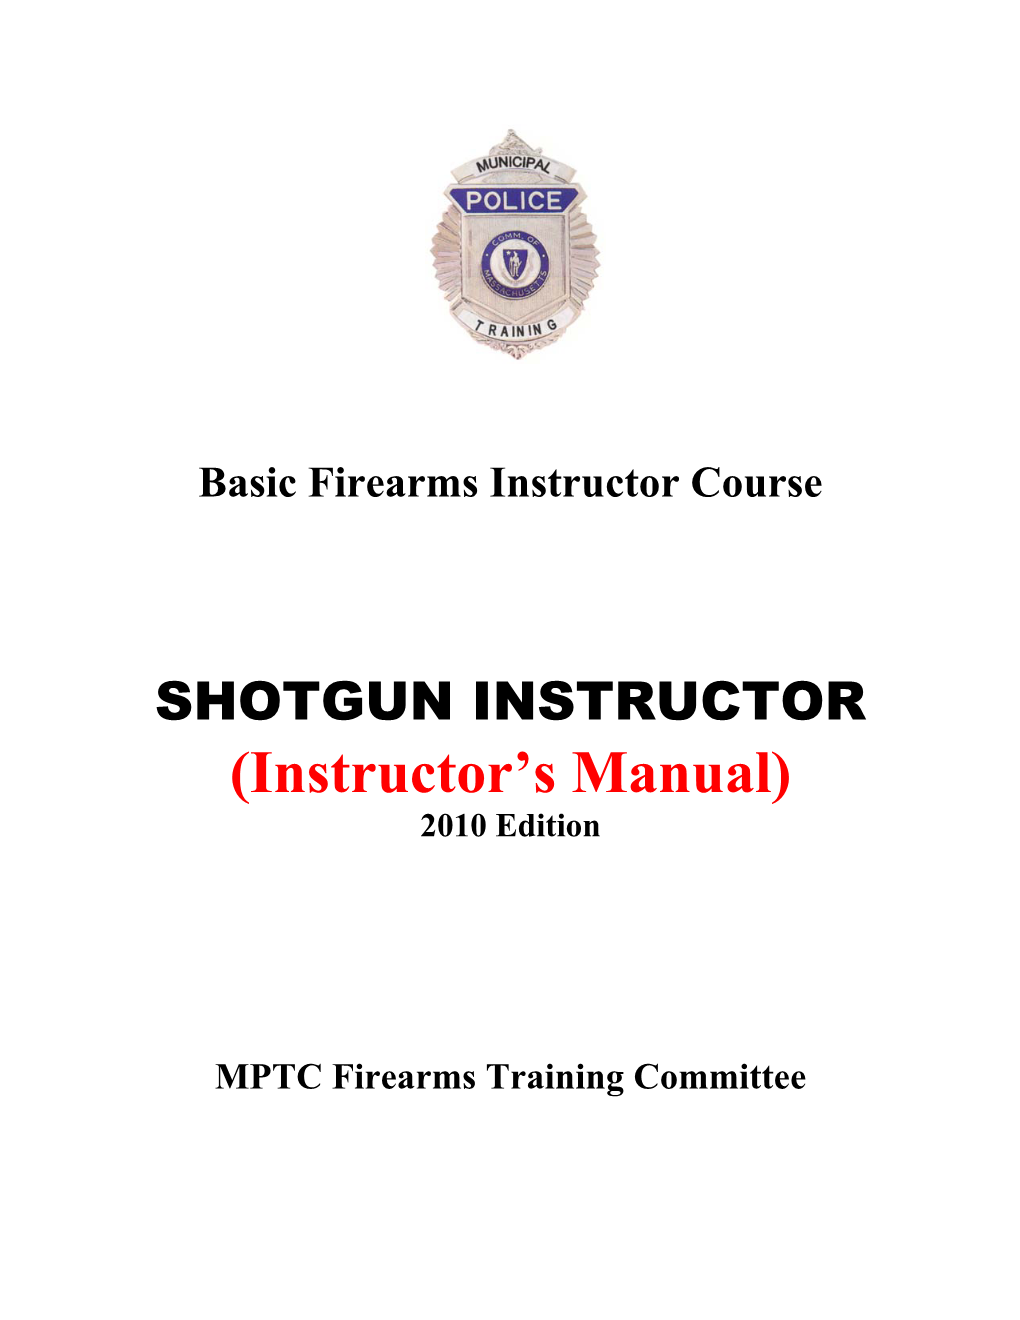 SHOTGUN INSTRUCTOR (Instructor's Manual)